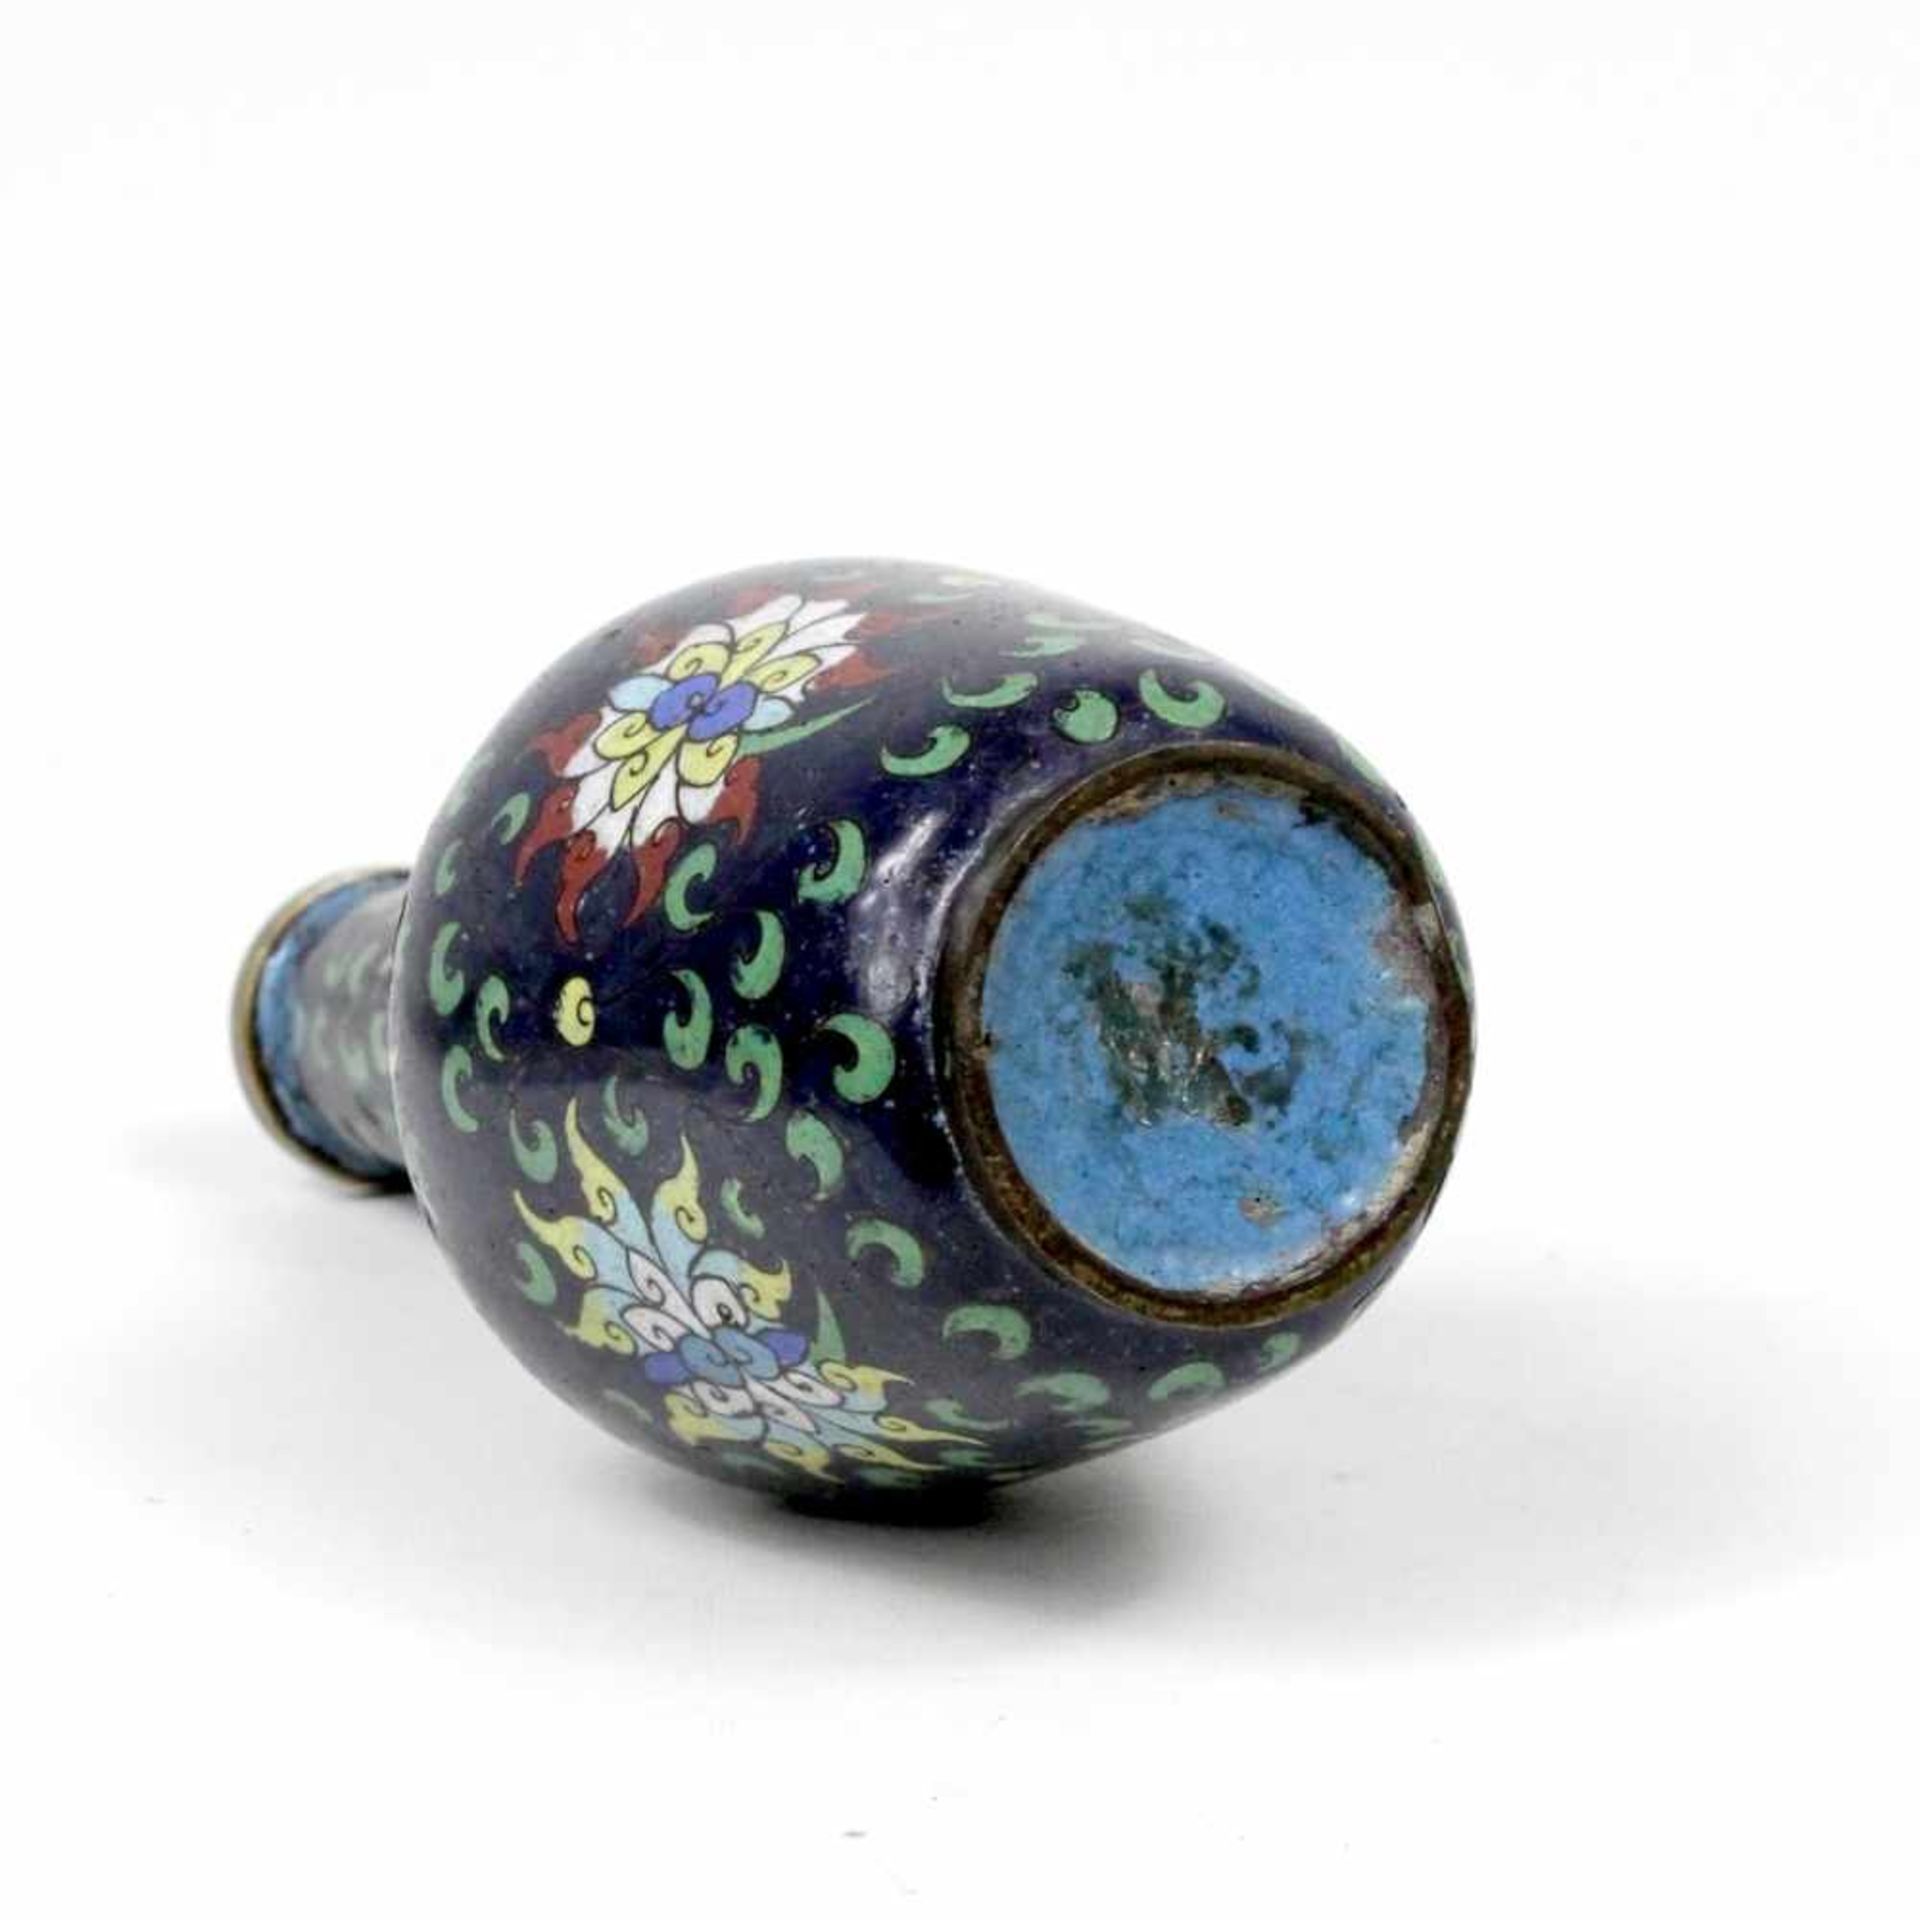 China Blaue Cloisonne-Chrysanthemen Vase frühe Qing Dynastie 17.Jhdt.< - Bild 5 aus 5